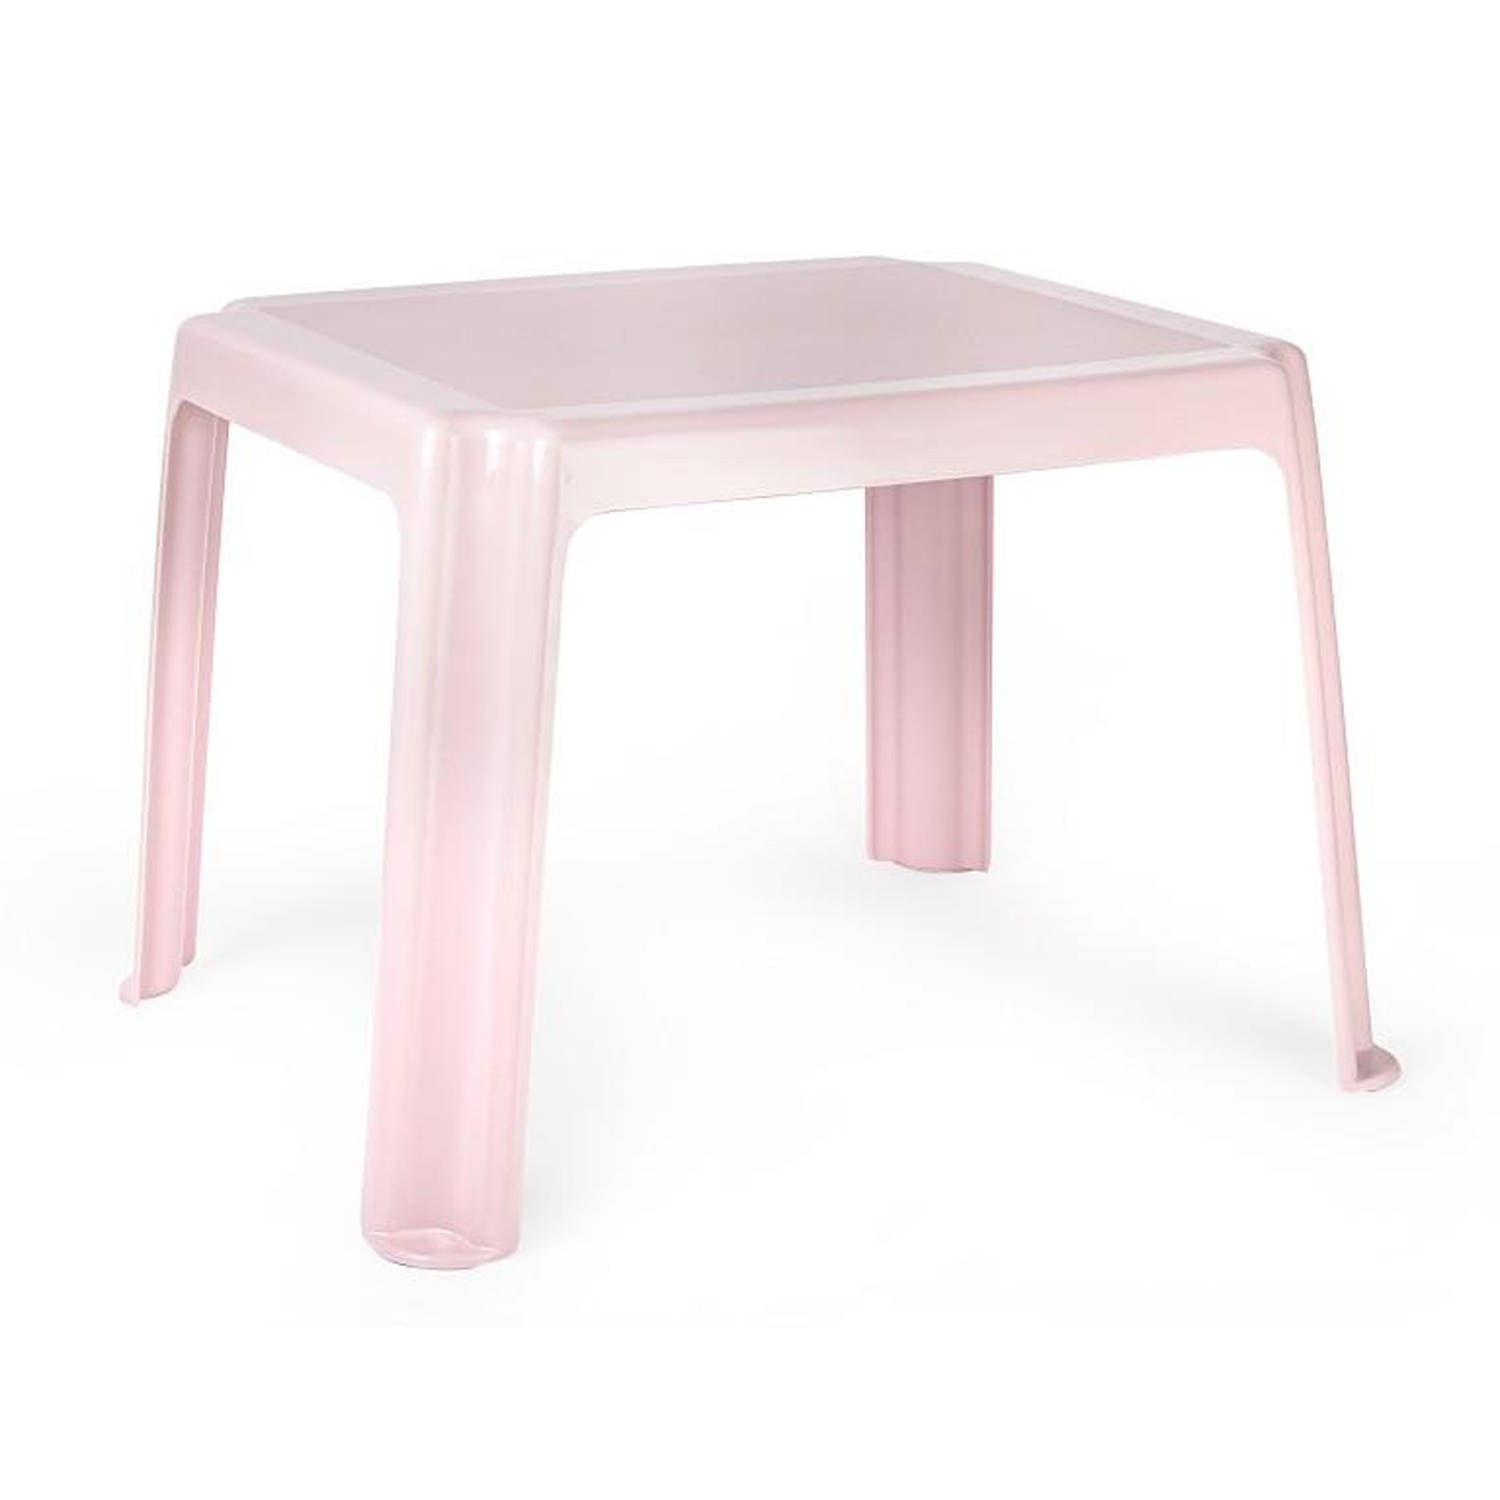 Forte Plastics Kunststof kindertafel roze 55 x 66 x 43 cm camping-tuin-kinderkamer Bijzettafels